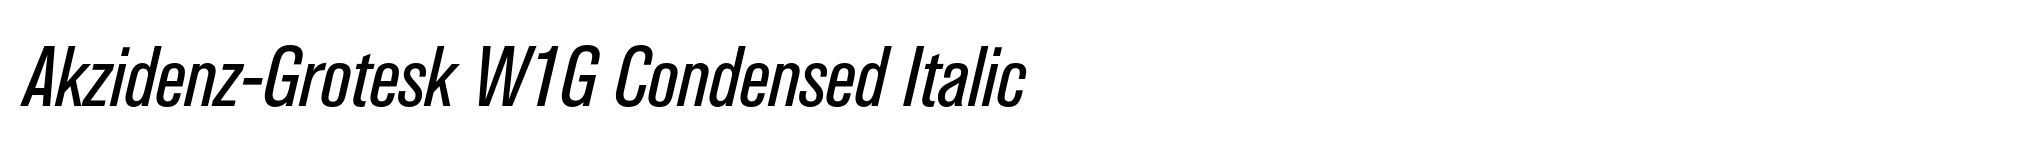 Akzidenz-Grotesk W1G Condensed Italic image